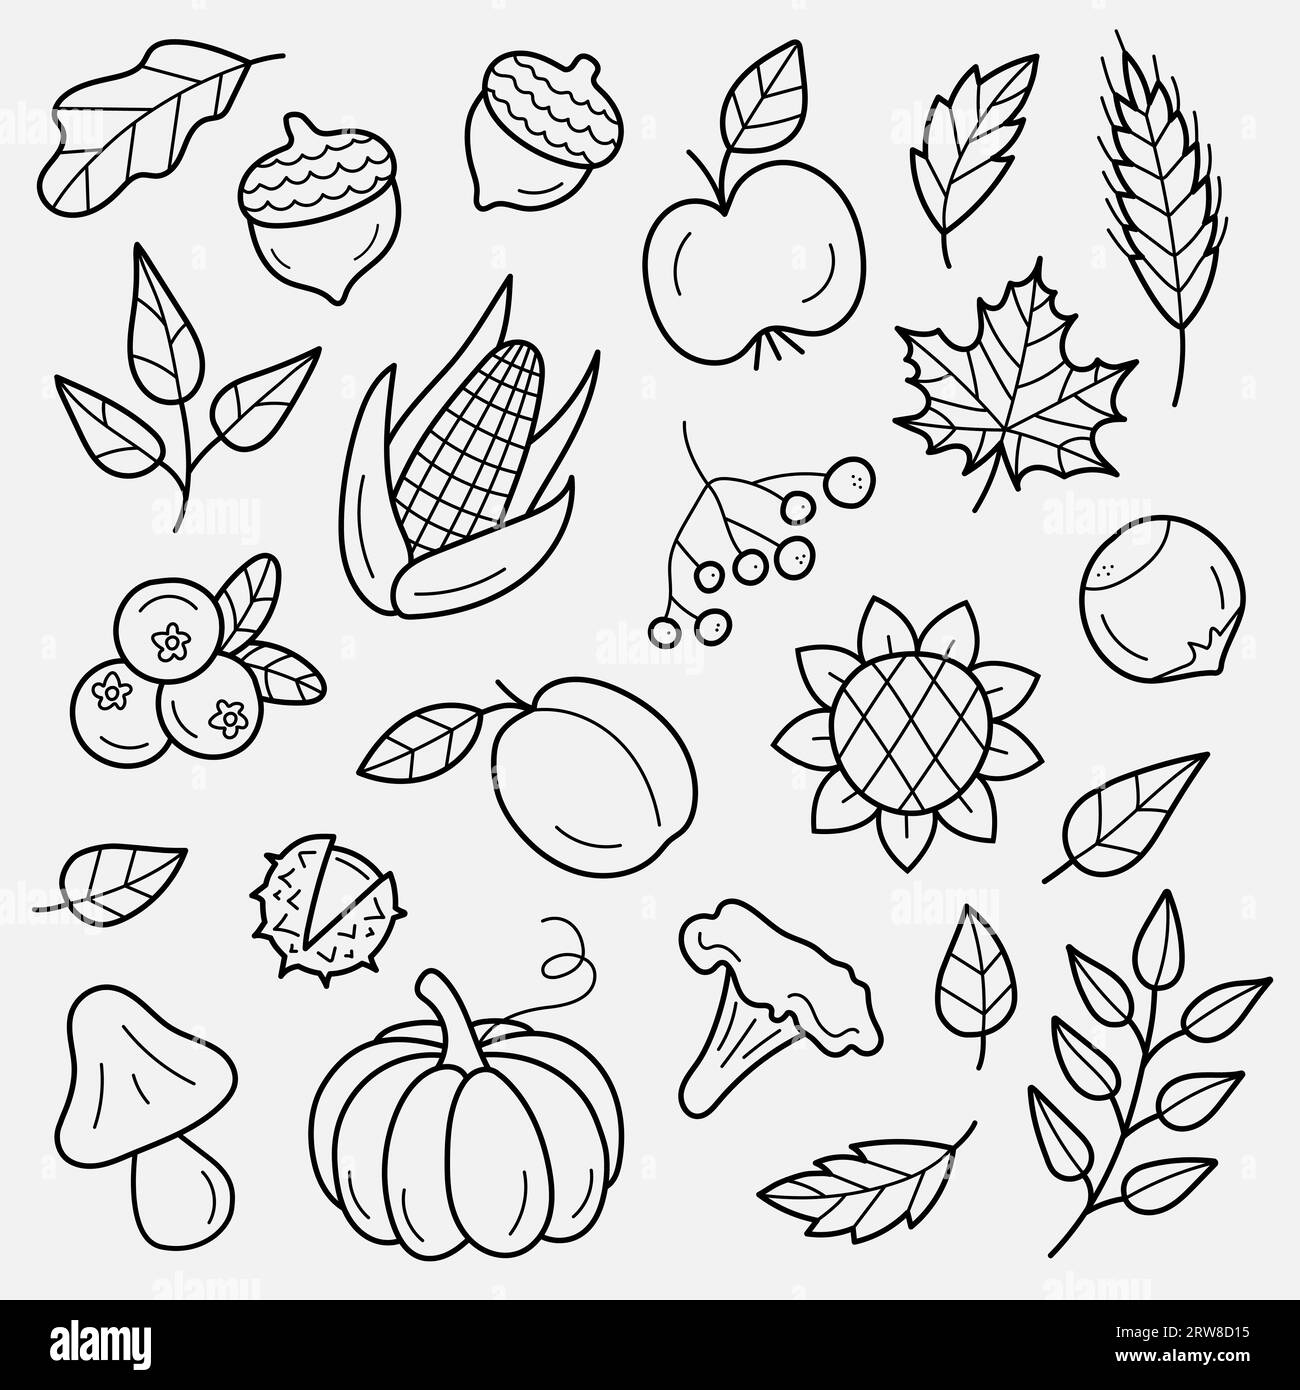 Autumn harvest symbols. Set of hand-drawn autumn elements. Leaves, berries, fruits, vegetables, mushrooms, acorns. Vector illustration in doodle style Stock Vector